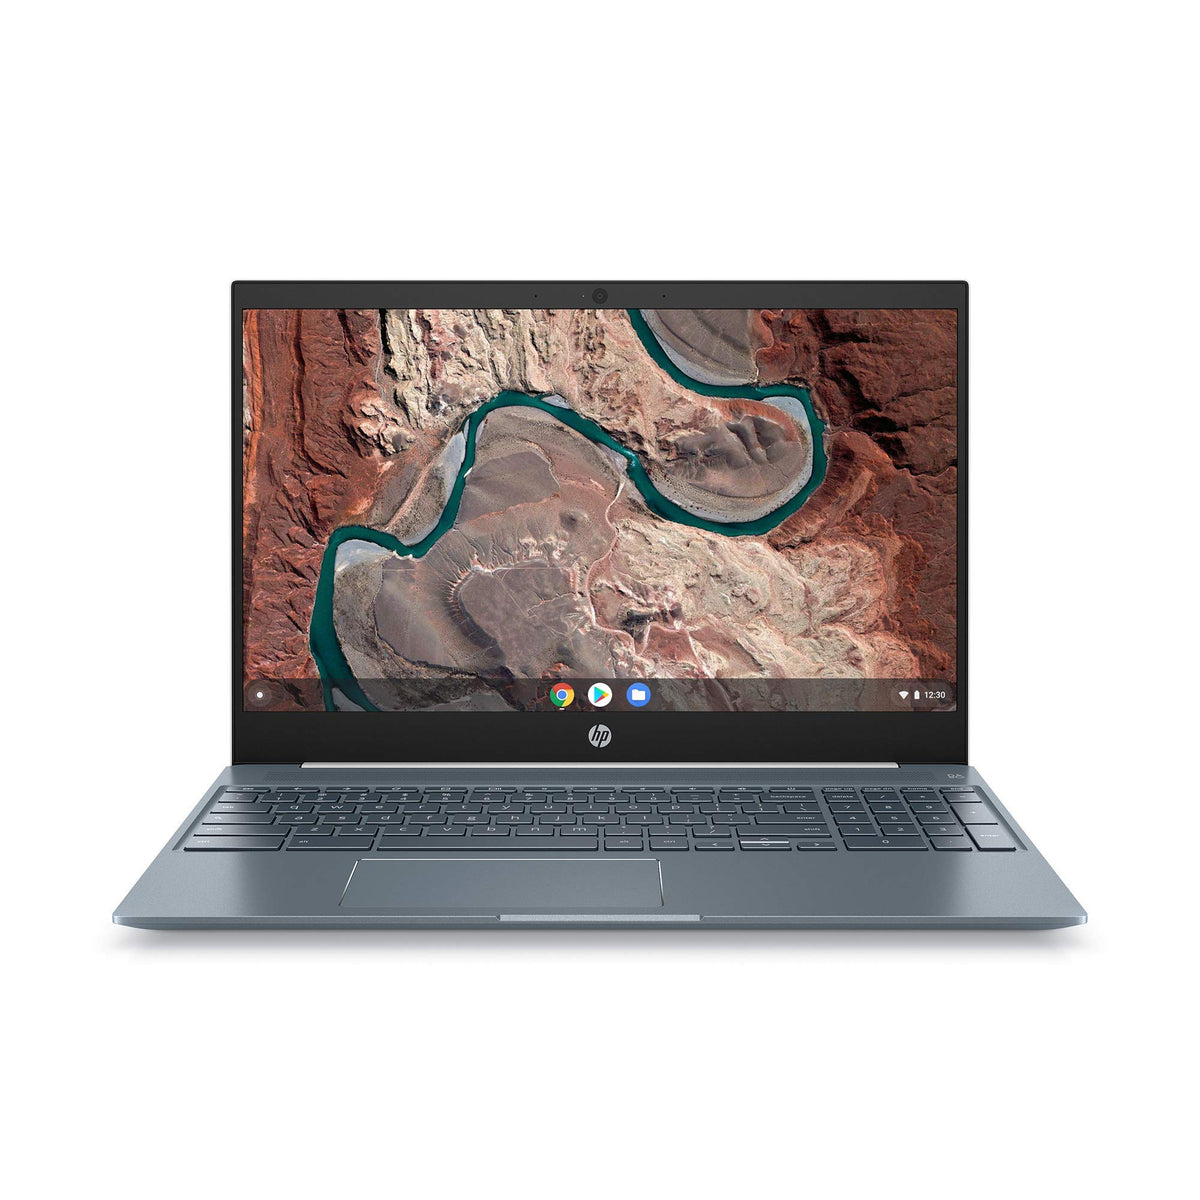 New 2020 HP Chromebook 15.6 Full HD IPS WLED-Backlit Touchscreen Intel Core i3-8130U 4GB SDRAM 128GB eMMC Backlit Keyboard Intel UHD Graphics 620